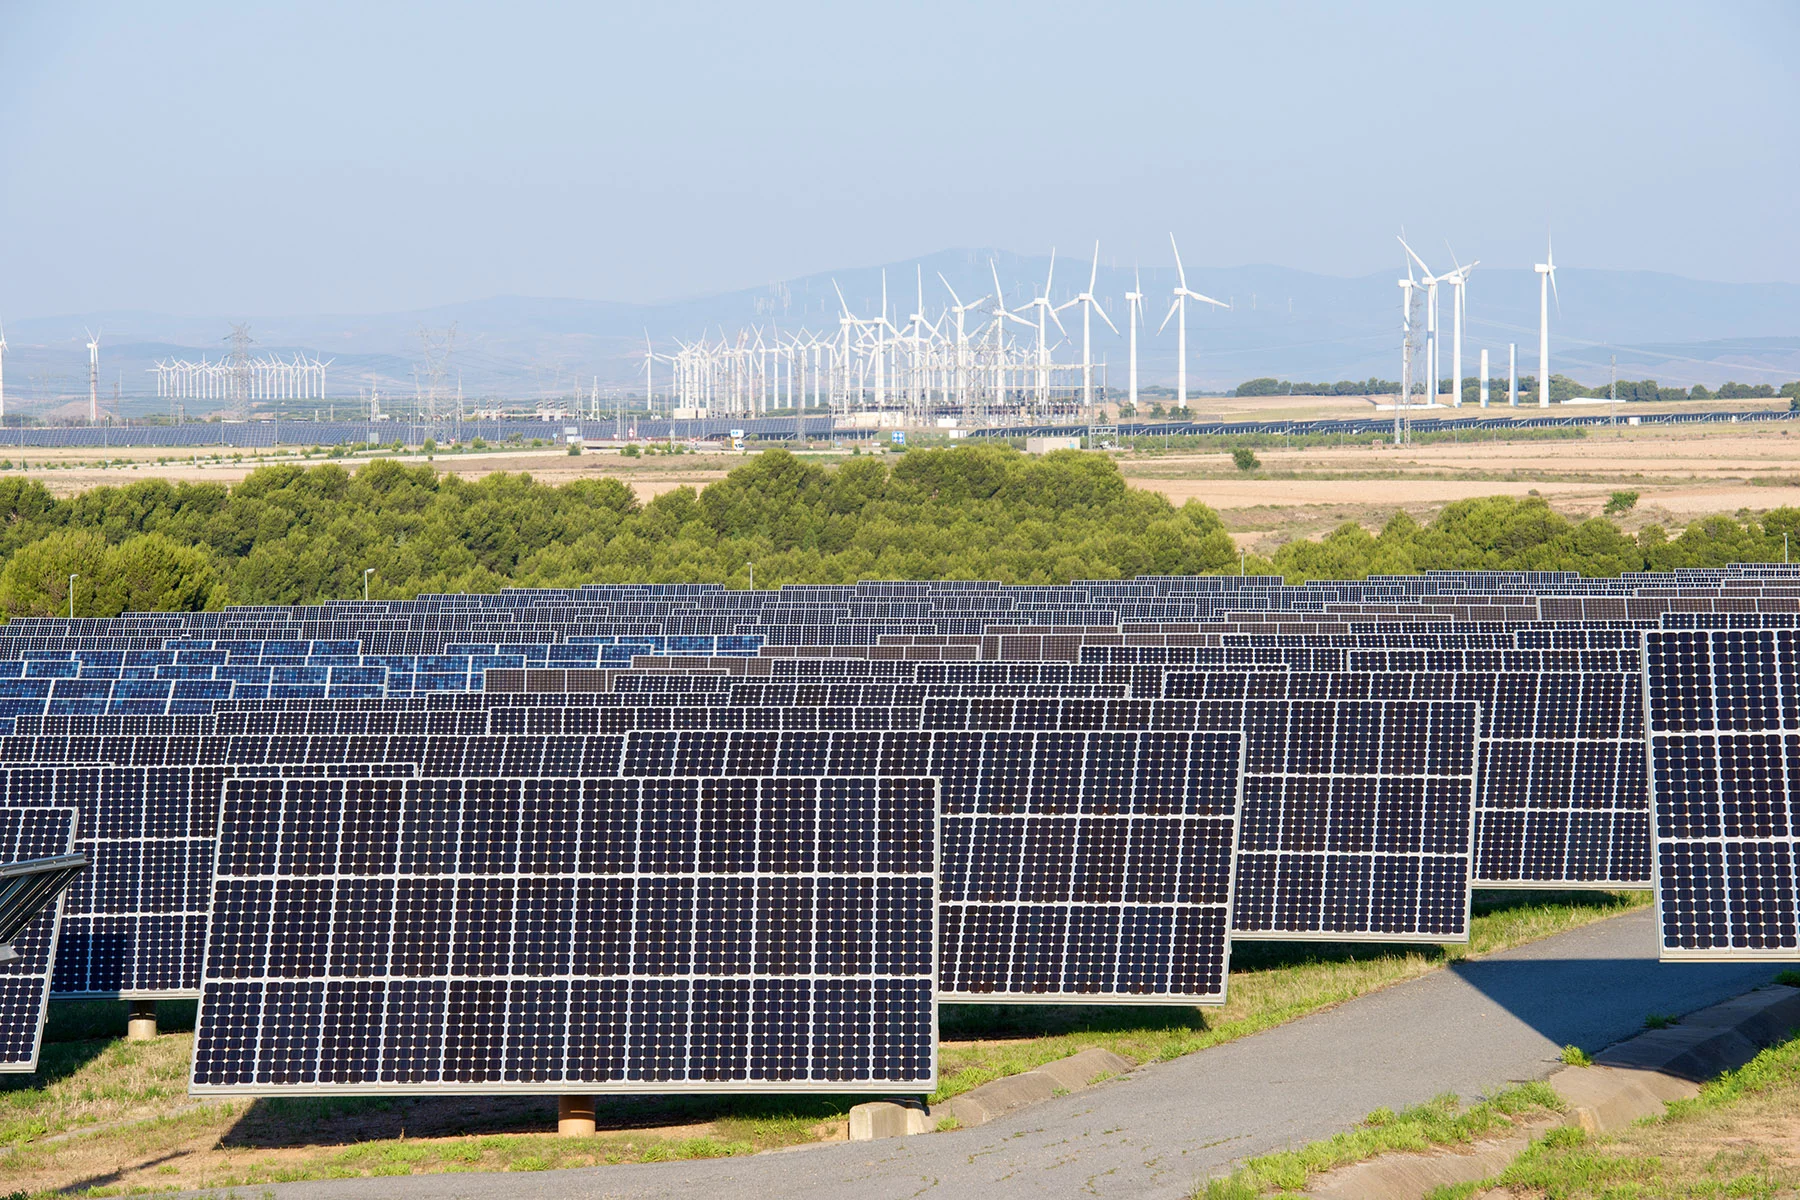 Solar panels in front of a wind power farm in Navarra, Spain